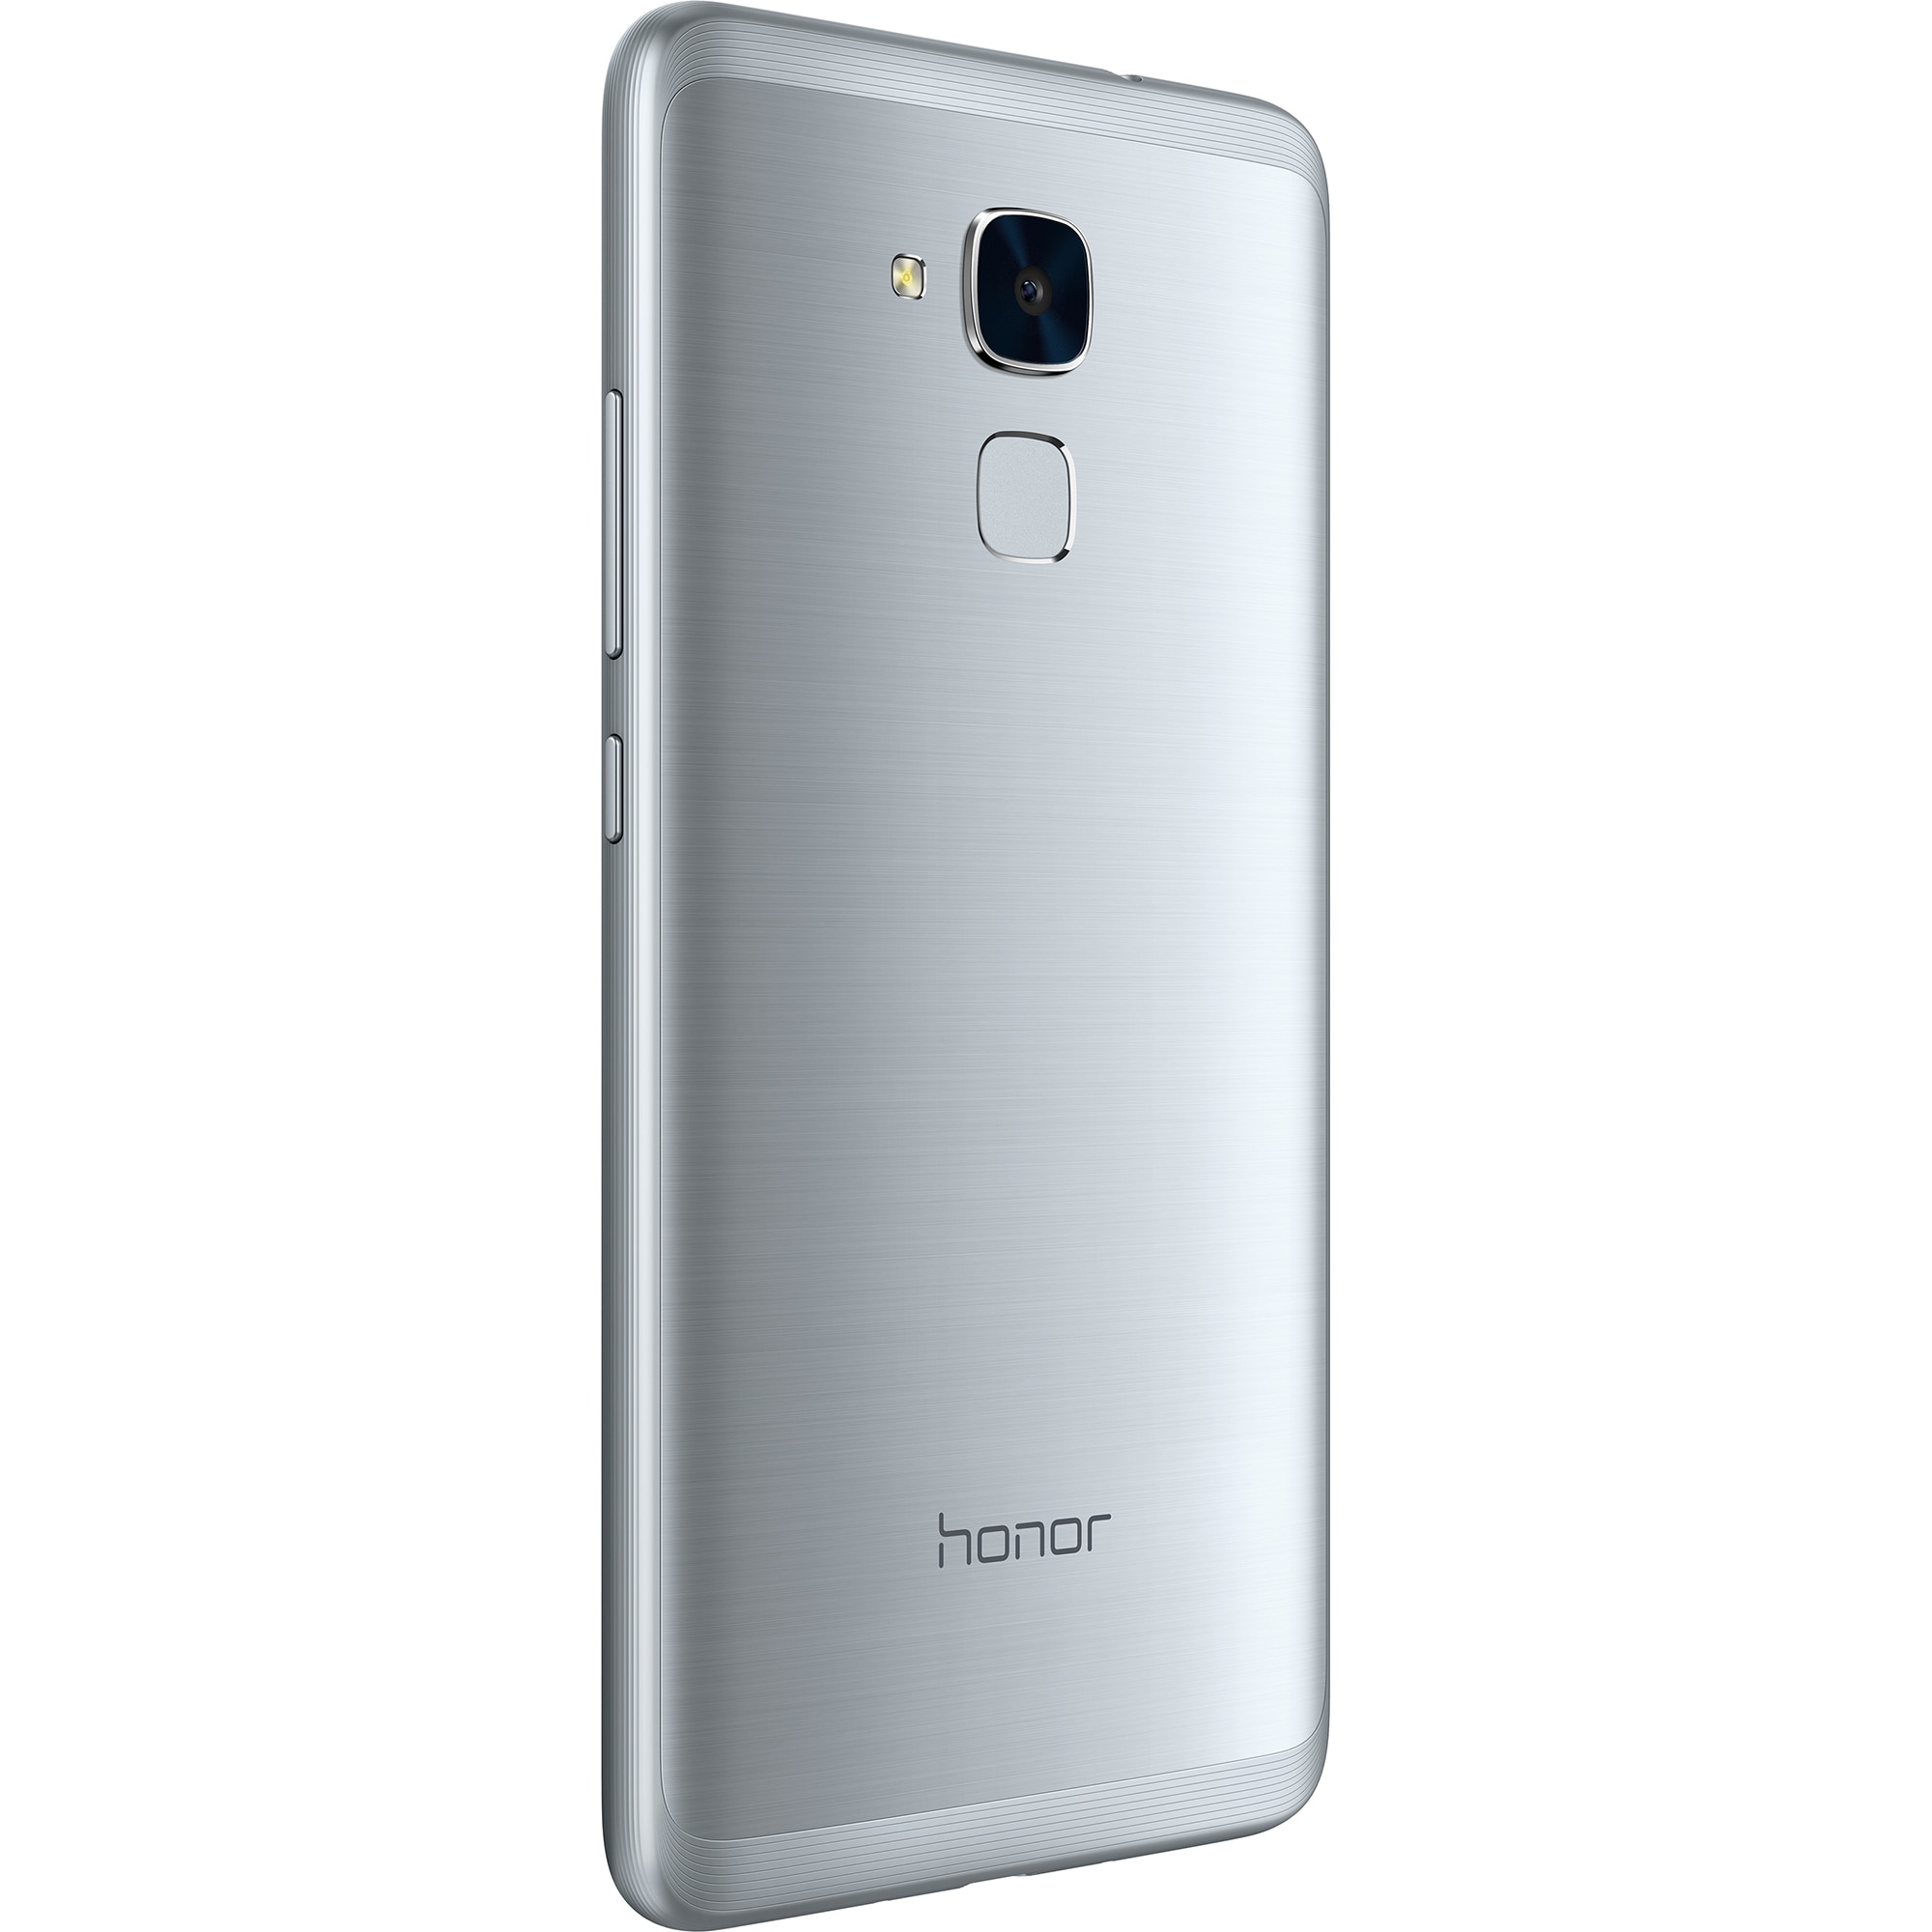 Хонор купить в нижнем новгороде. Хонор 5. Huawei Honor 5. Хонор Хуавей смартфон 5а. Хонор 7 Лайт.